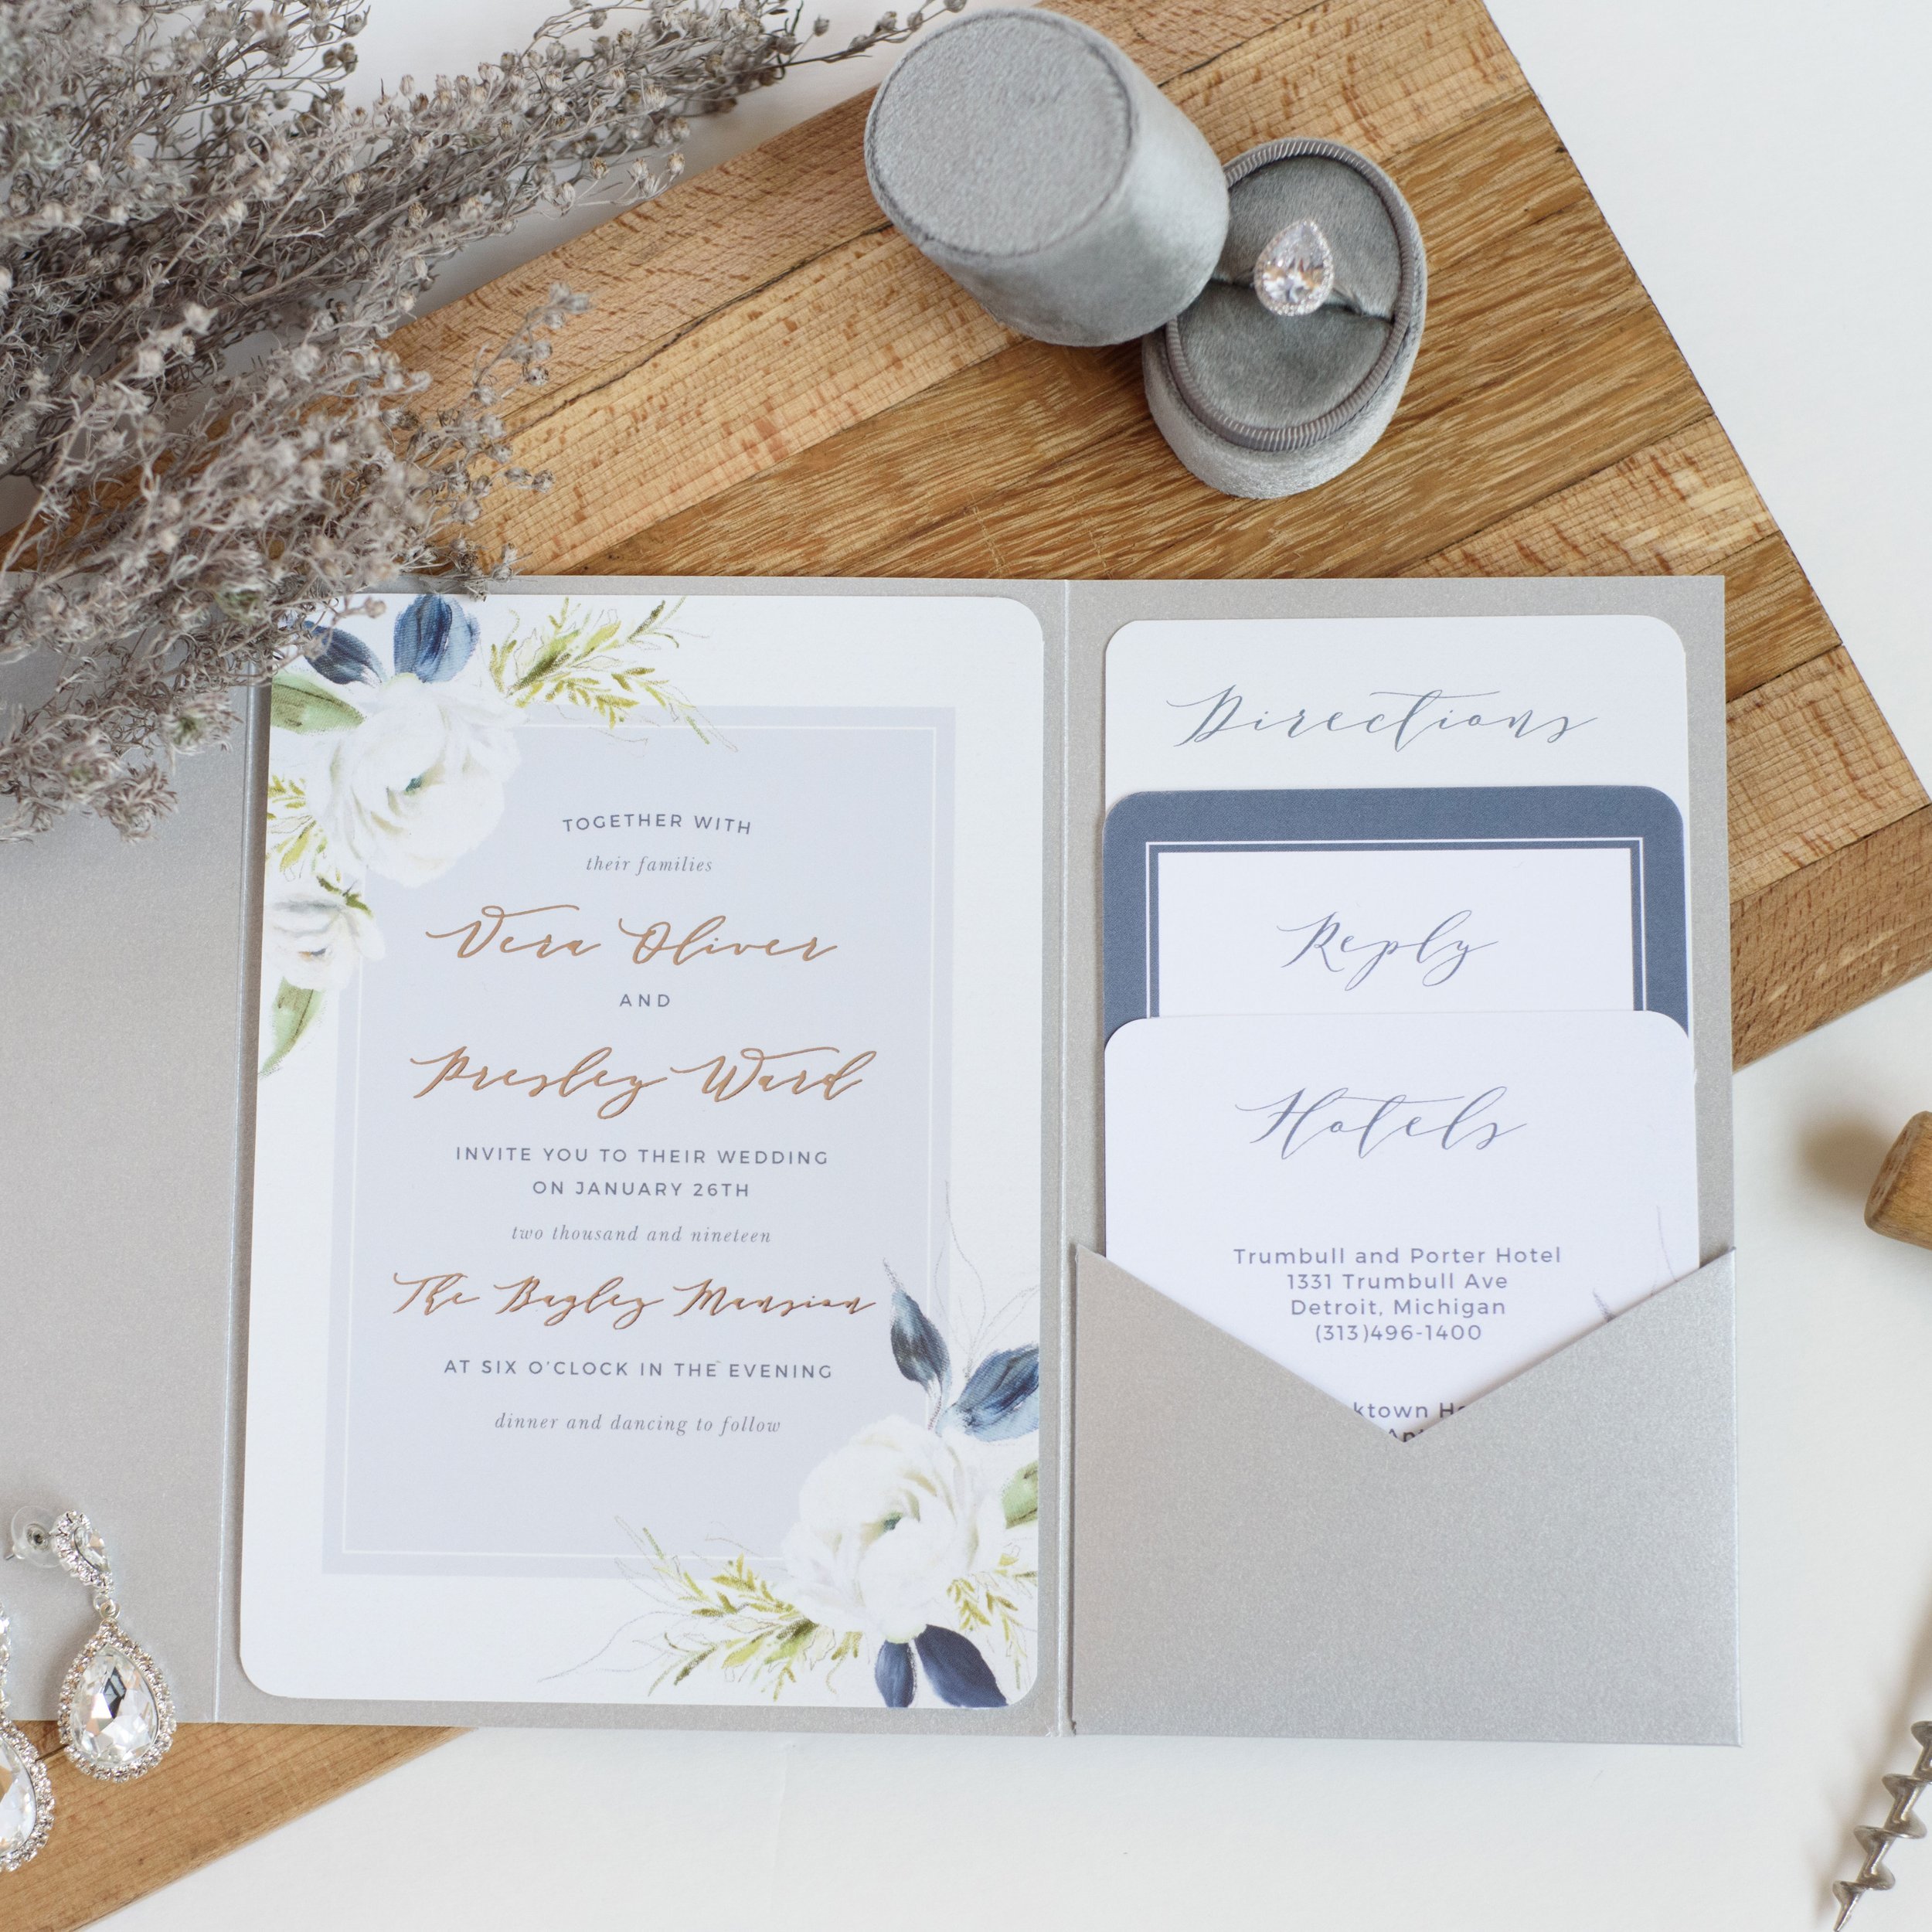 basic-invite-wedding-invitations5.jpg